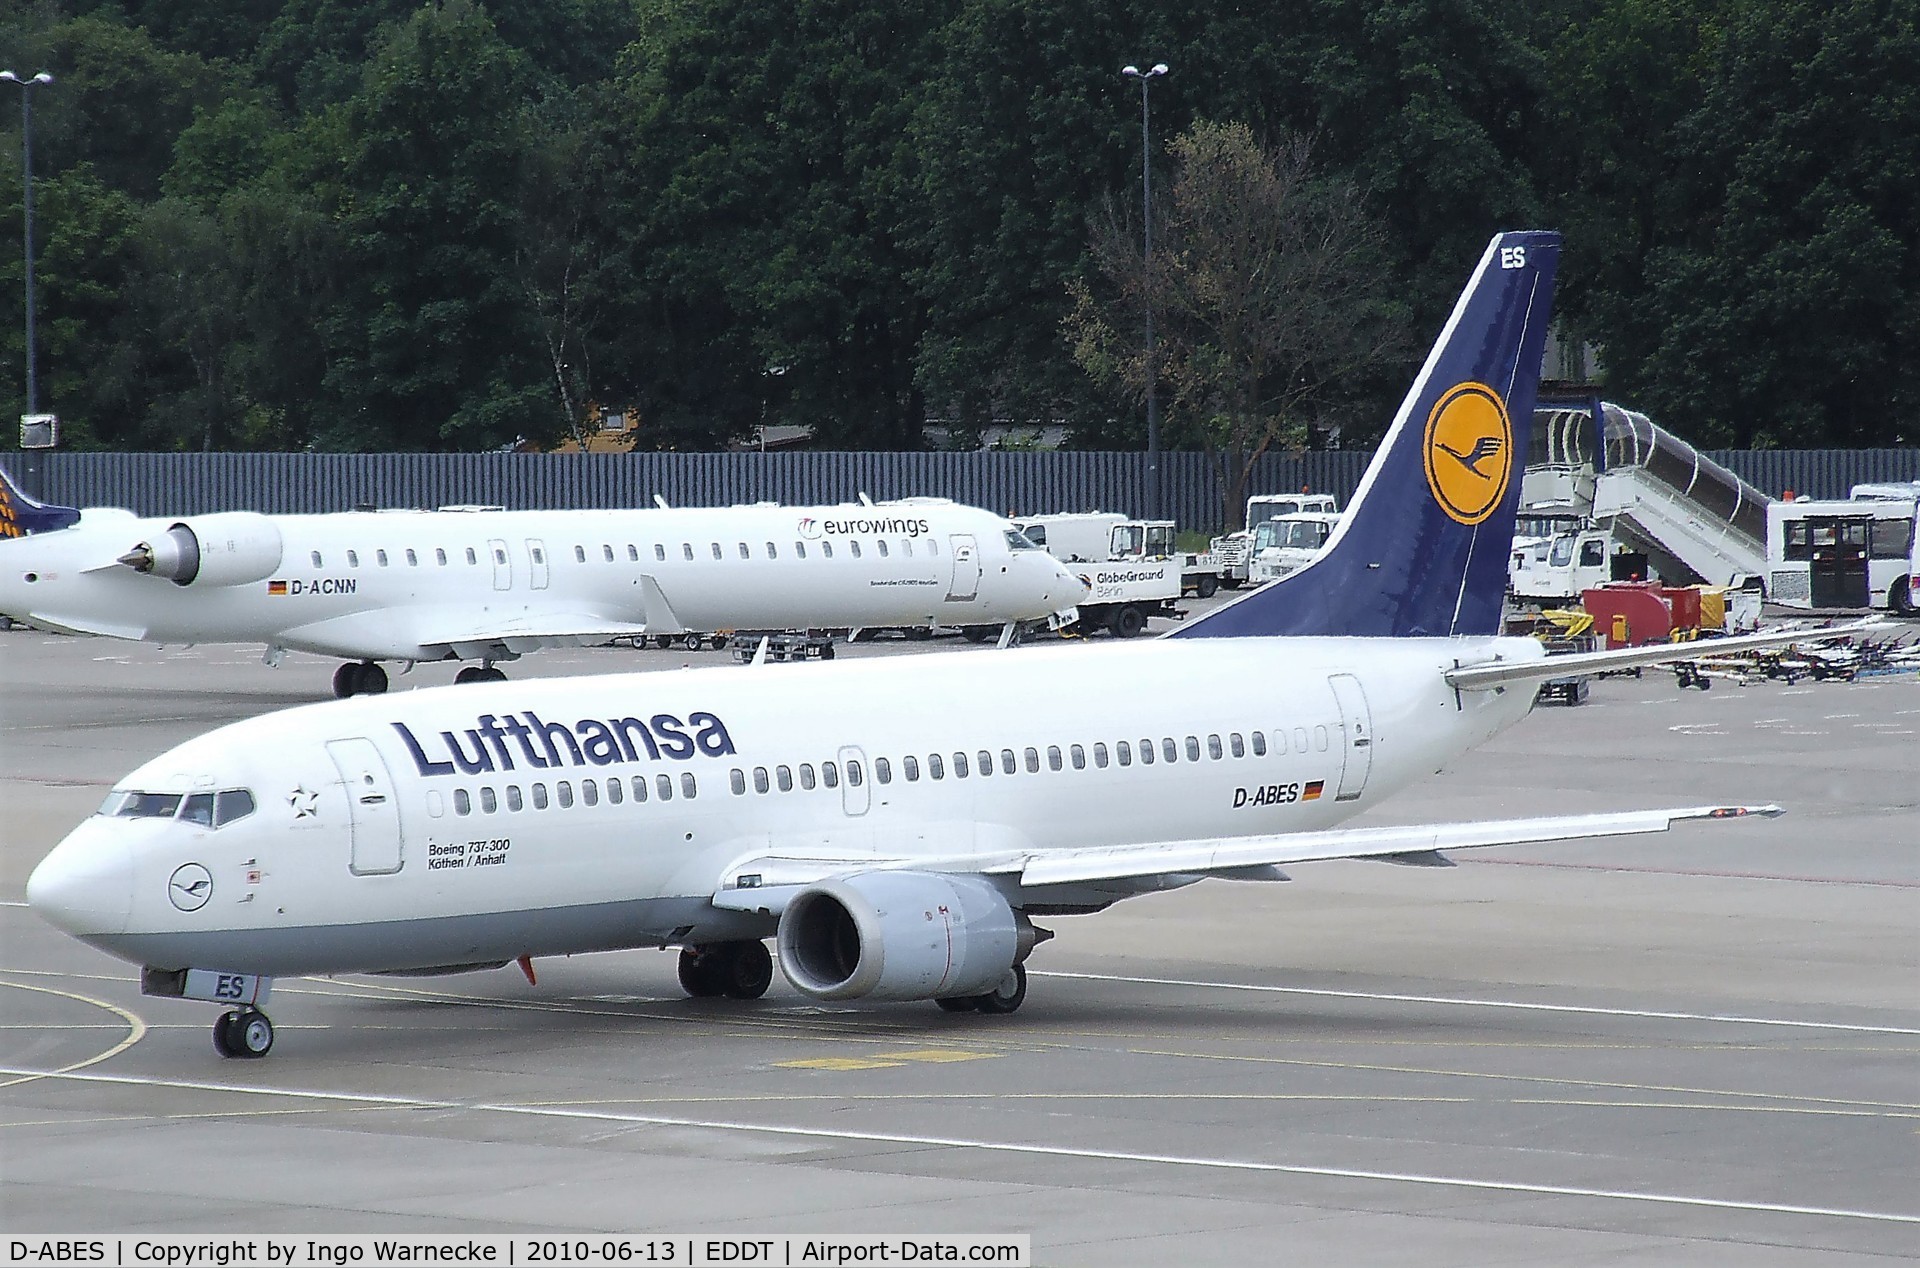 D-ABES, 1992 Boeing 737-330 C/N 26432, Boeing 737-330 of Lufthansa at Berlin/Tegel airport